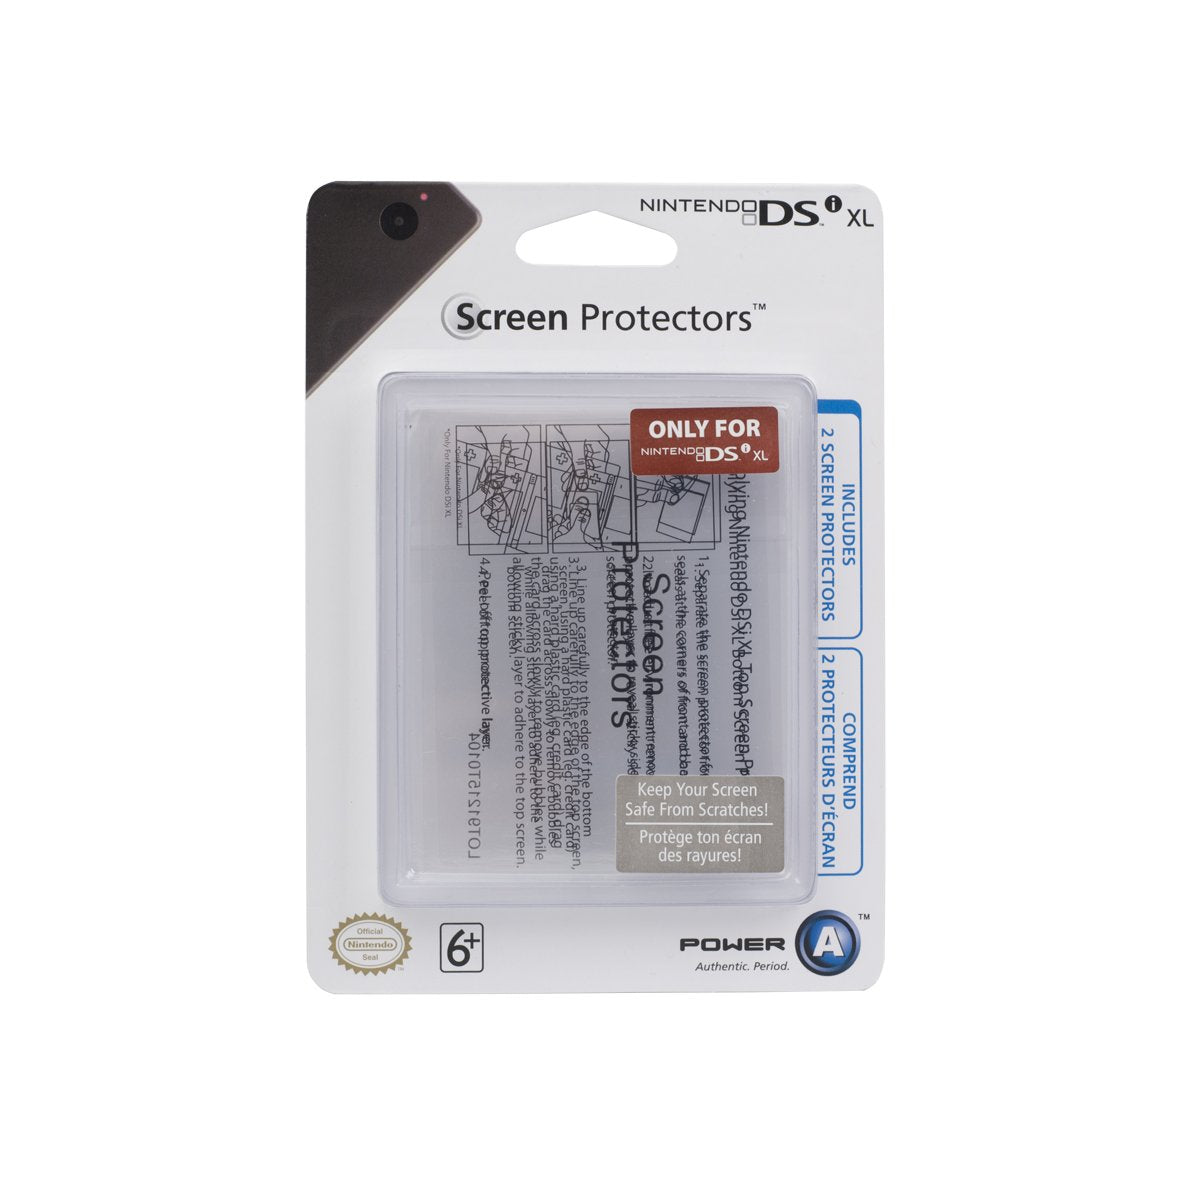 Nintendo DSi XL Official Nintendo Screen Protectors (NDS) Nintendo DS Accessories Power A   